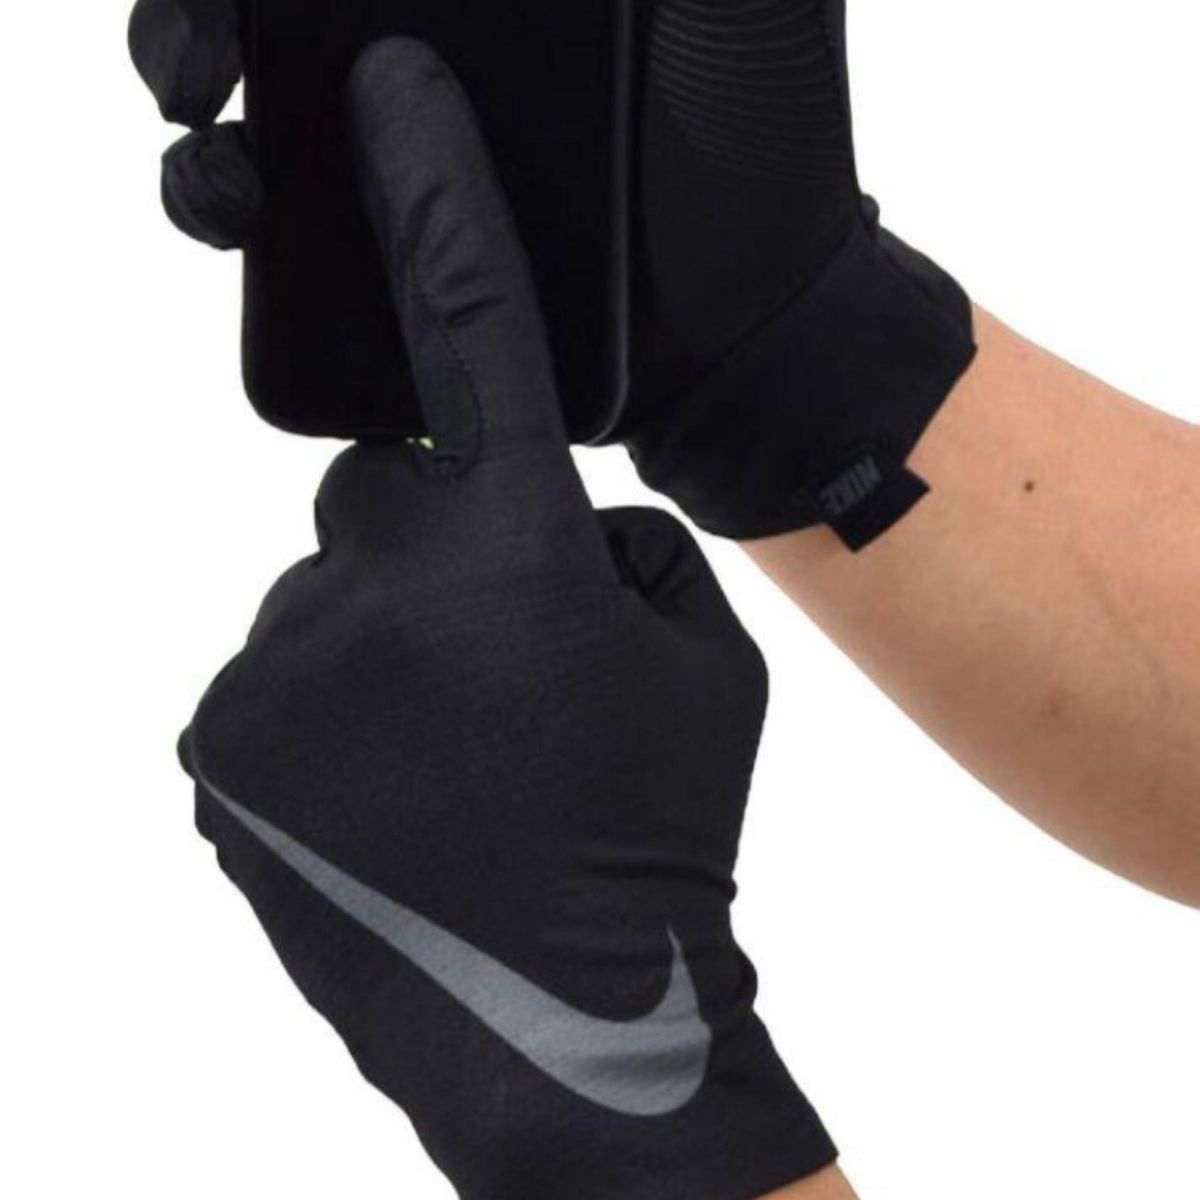 NIKE Base-Layer Gloves